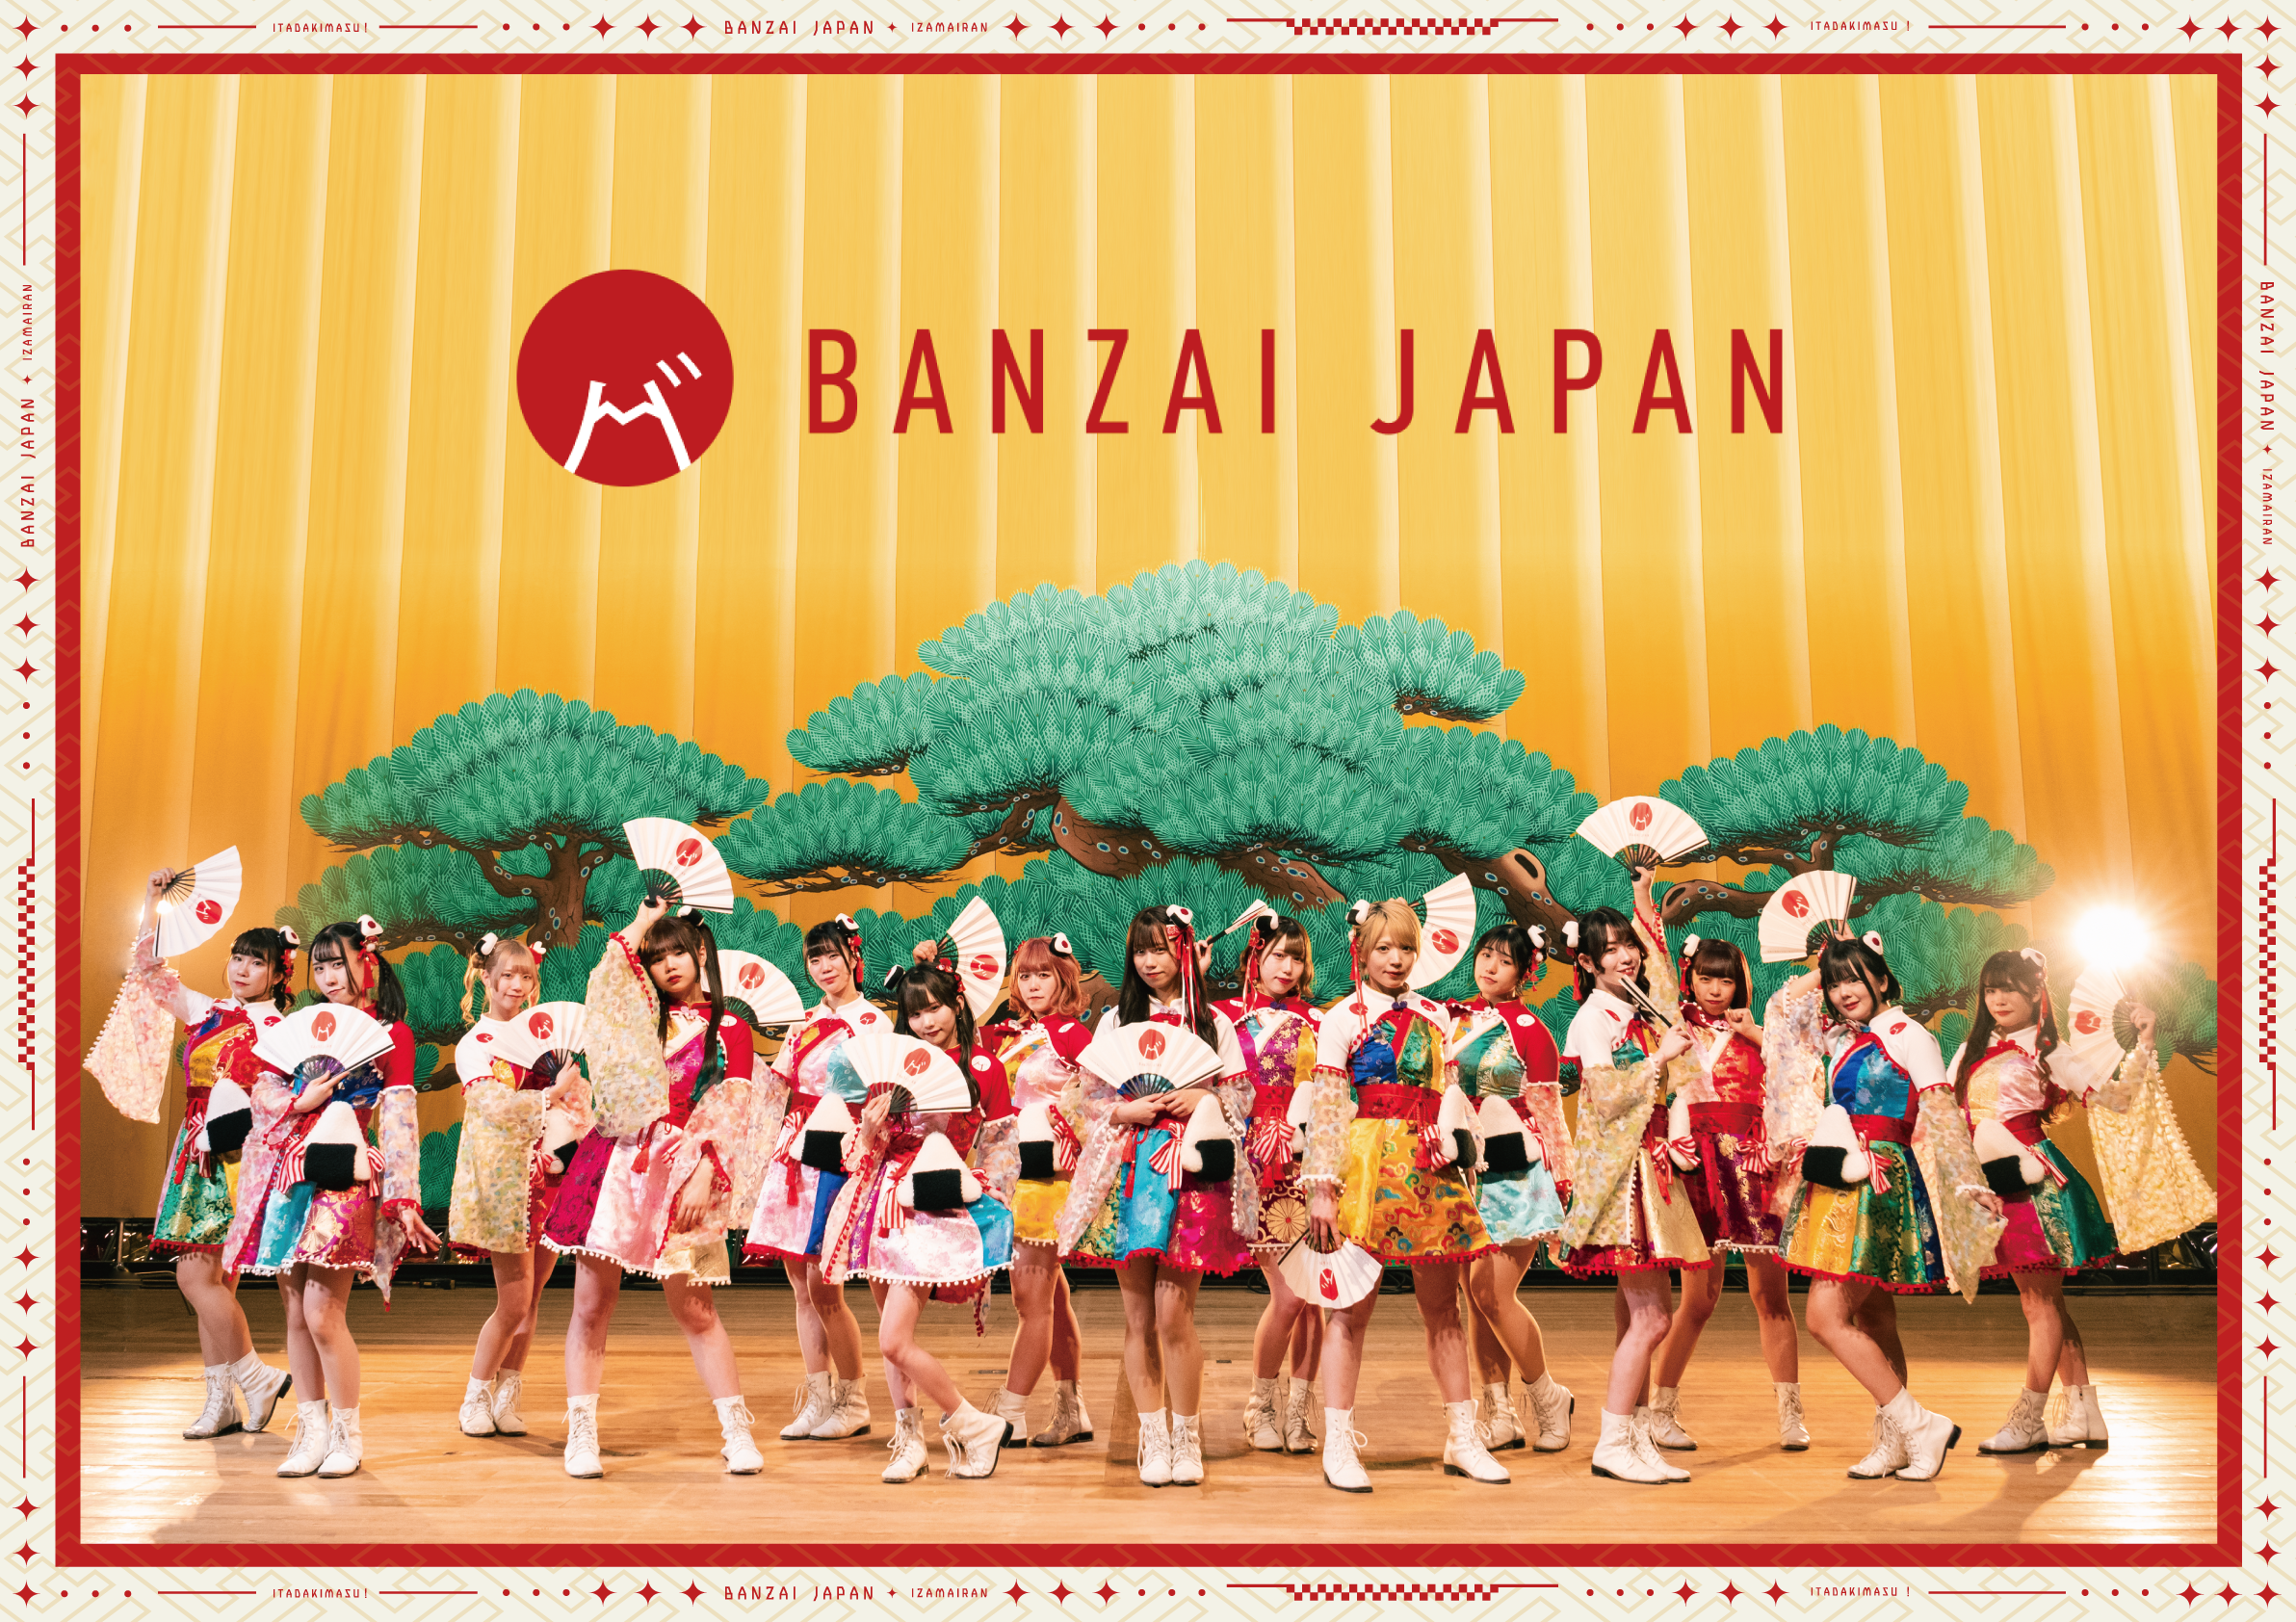 BANZAI JAPAN (バンザイジャパン)